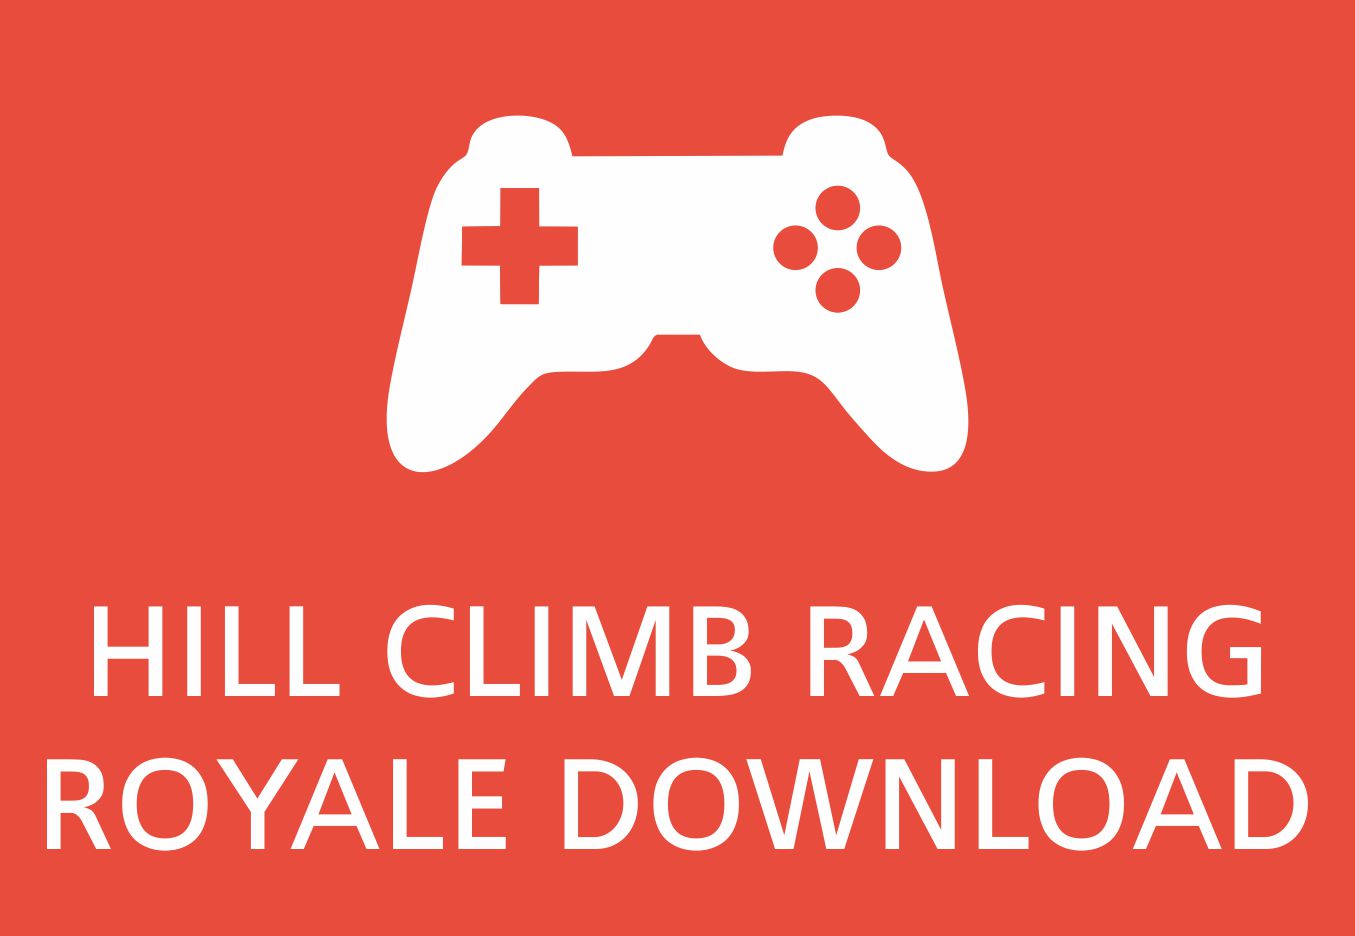 Hill climb racing